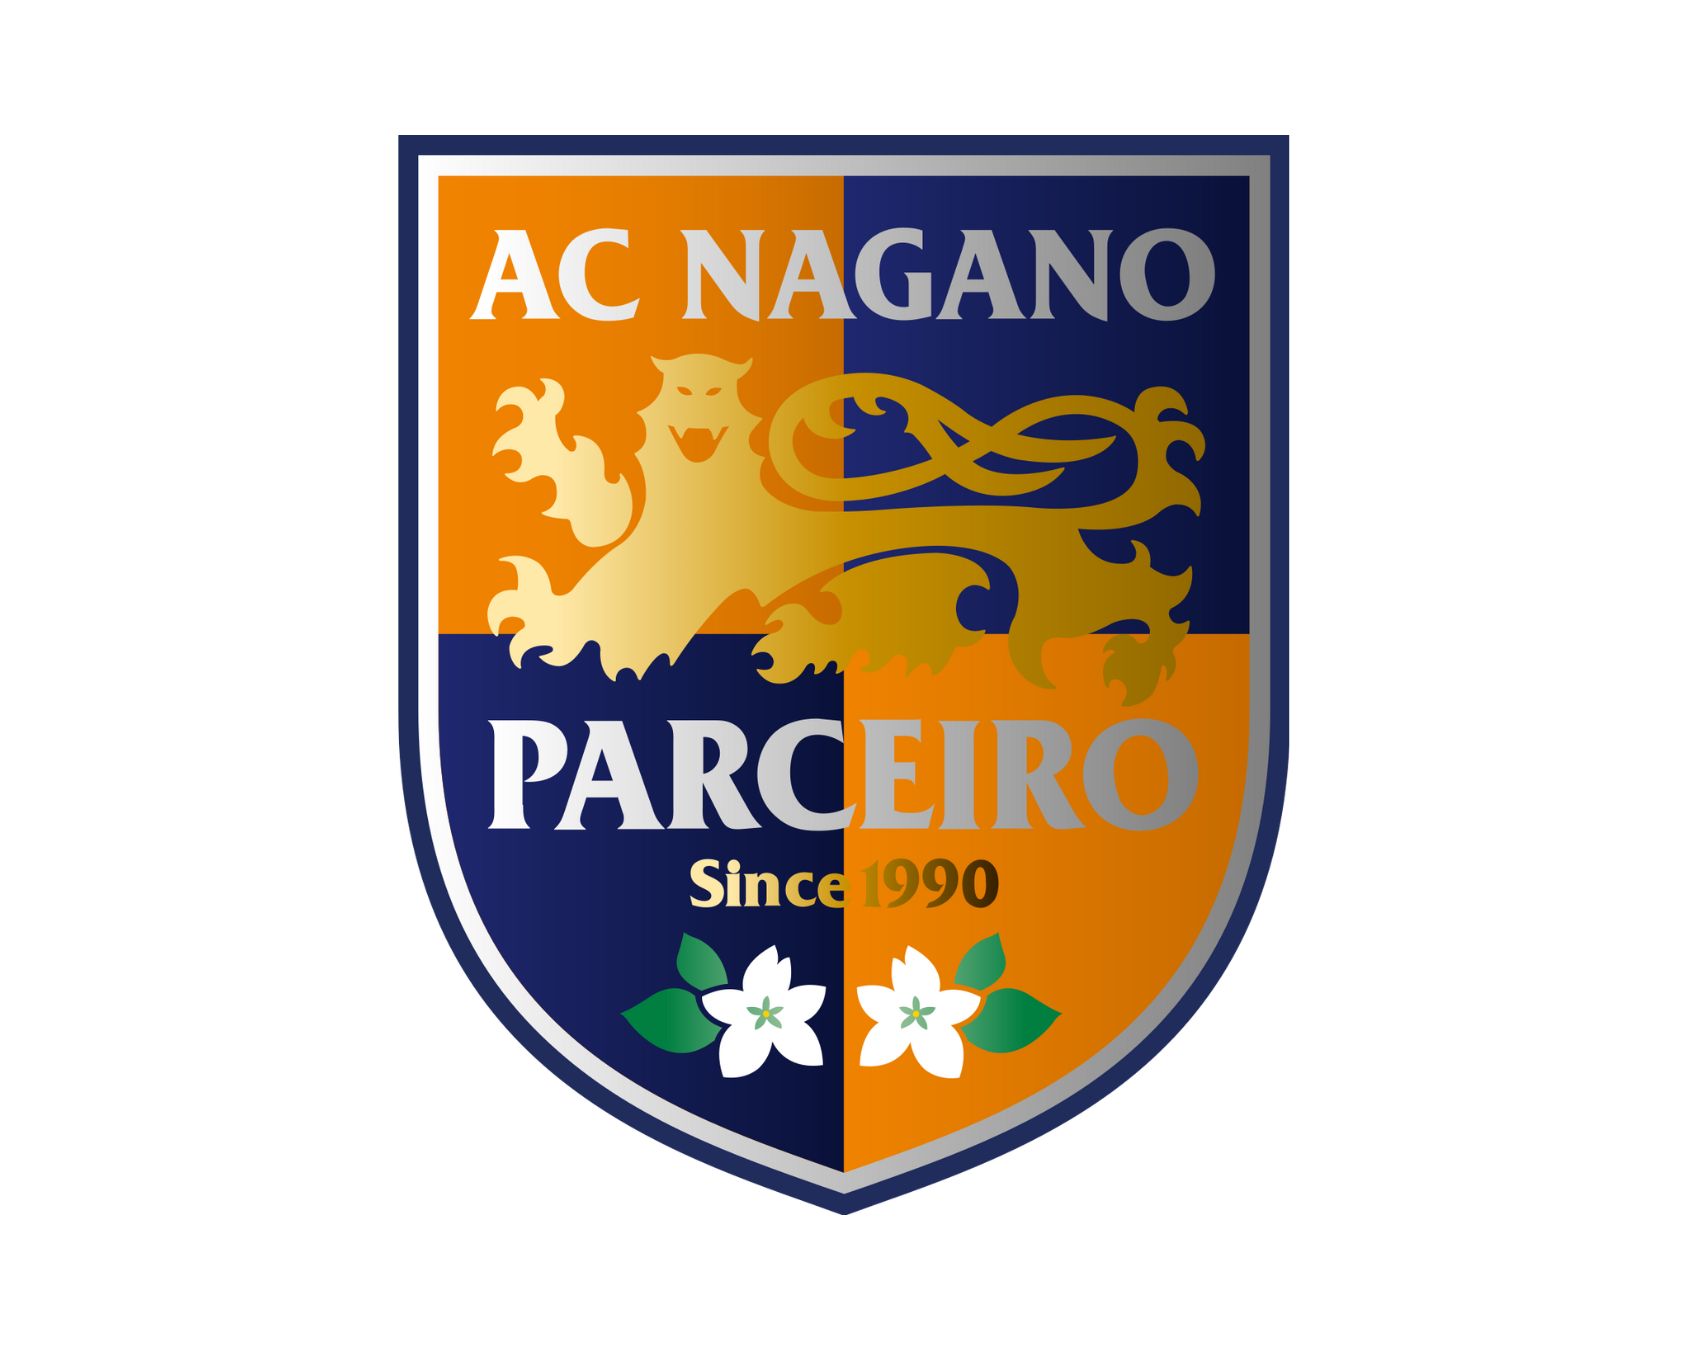 Ac Nagano Parceiro Ladies: 25 Football Club Facts - Facts.net